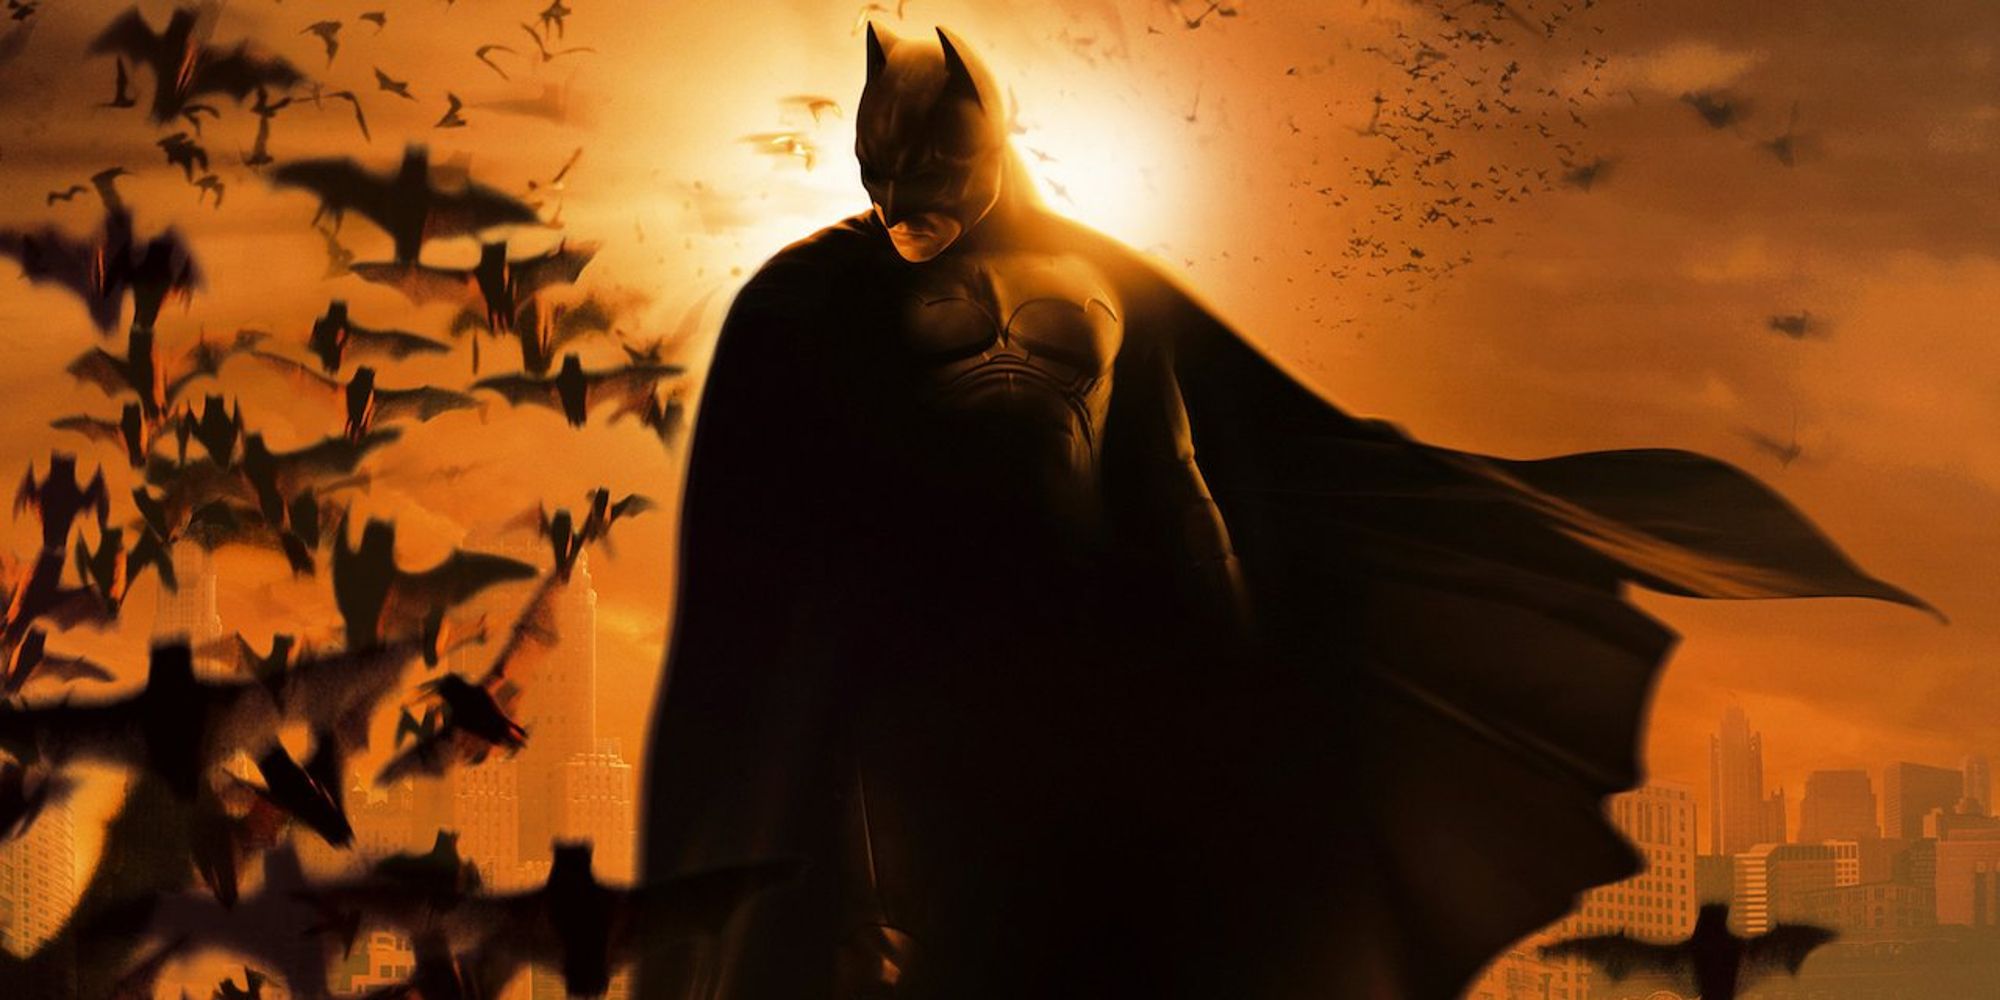 Batman overlooking Gotham with a swarm of bats in banner for Batman Begins